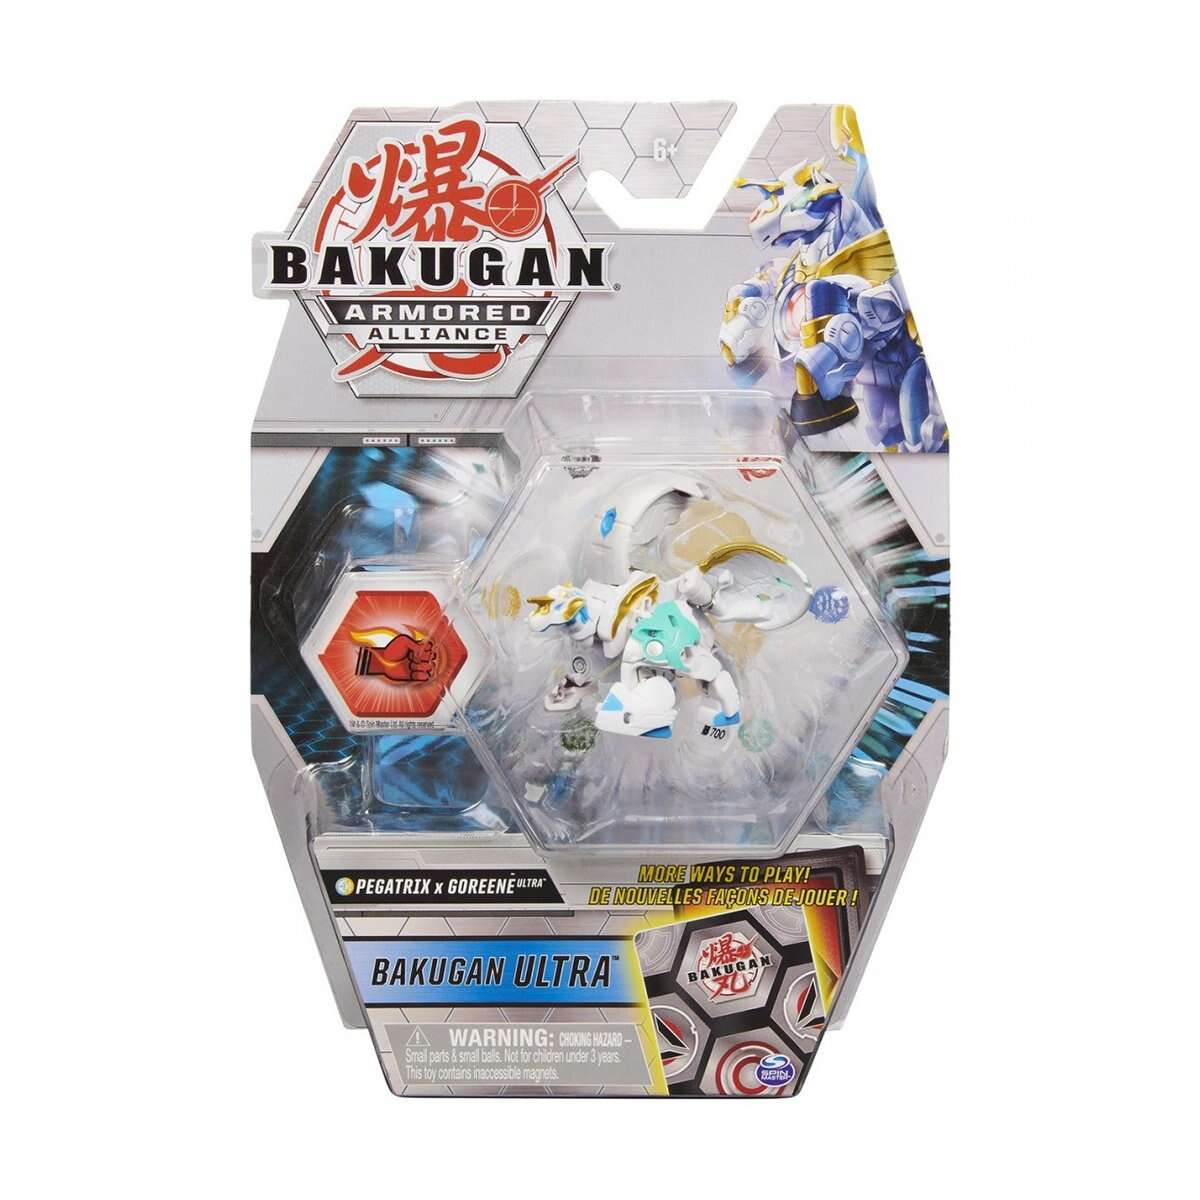 Figurina Bakugan Ultra Armored Alliance, Pegatrix x Goreene, 20124617